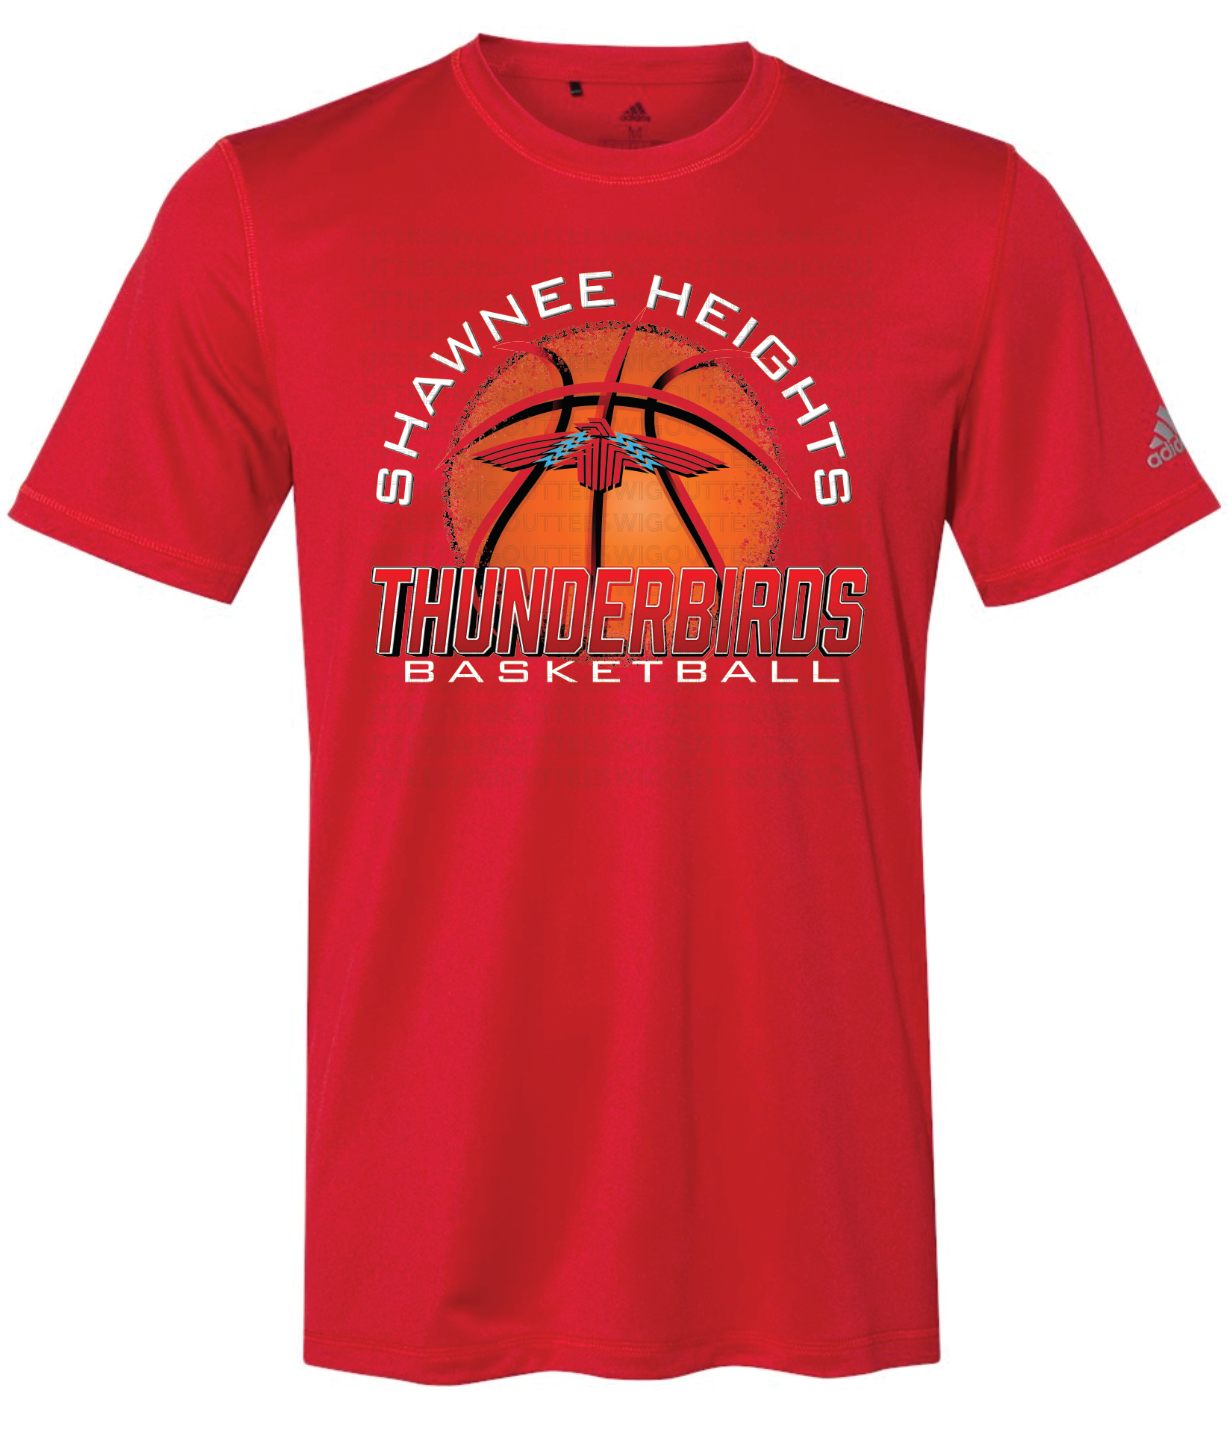 Thunderbirds Basketball Adidas Sports T-shirt